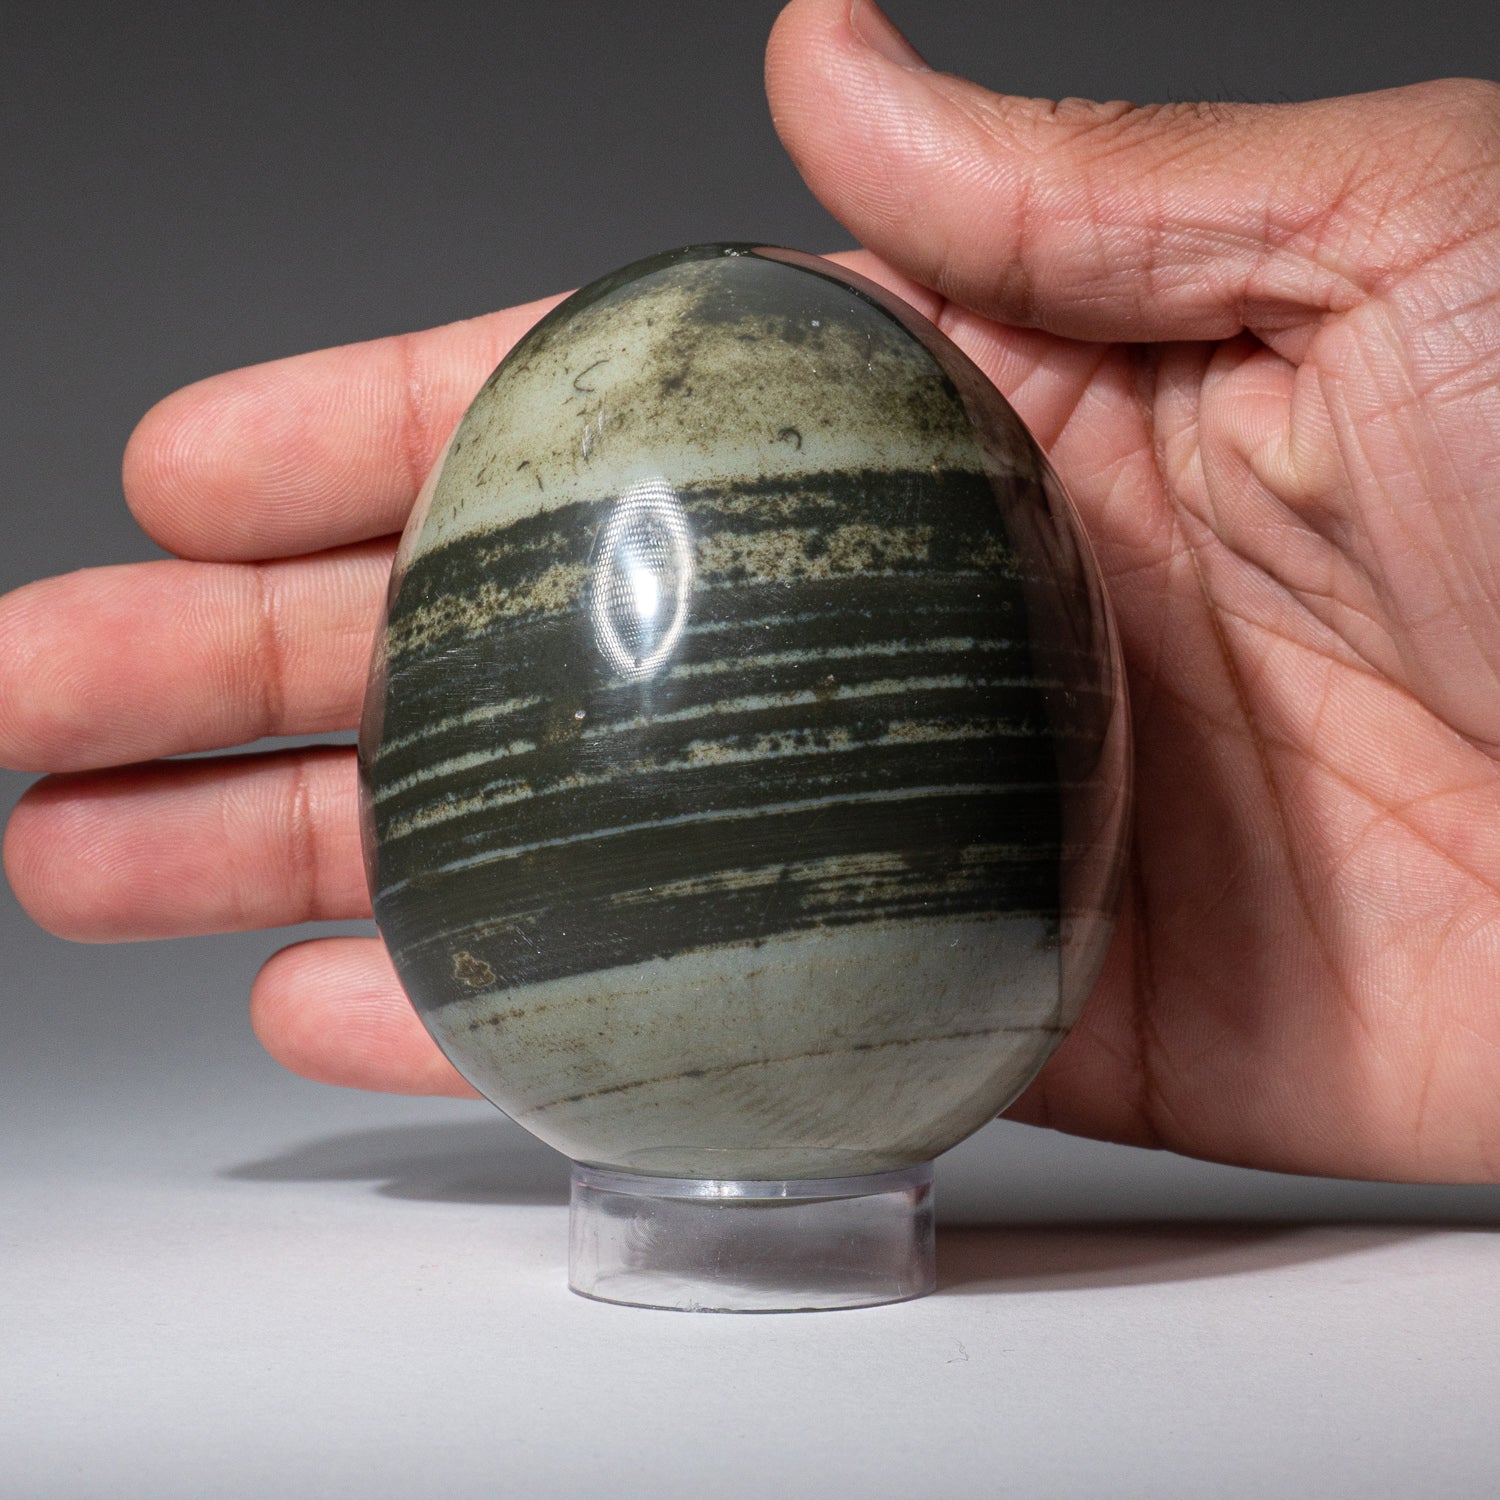 Genuine Polished Polychrome Egg from Madagascar (505.6 grams)